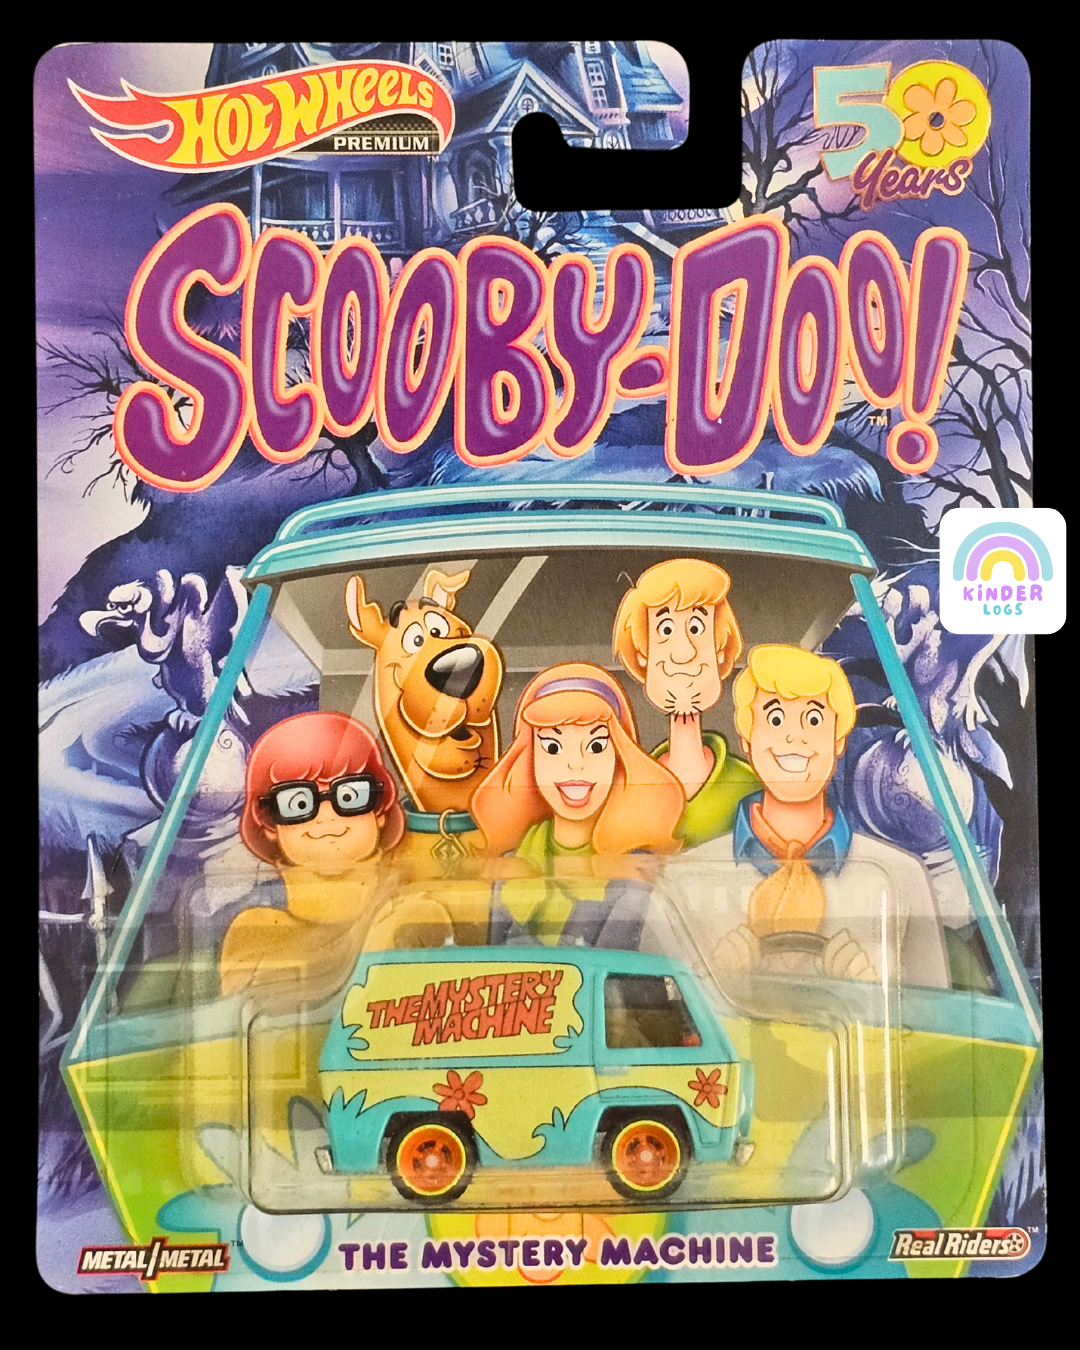 Premium Hot Wheels Scooby-Doo The Mystery Machine - 50 Years Edition